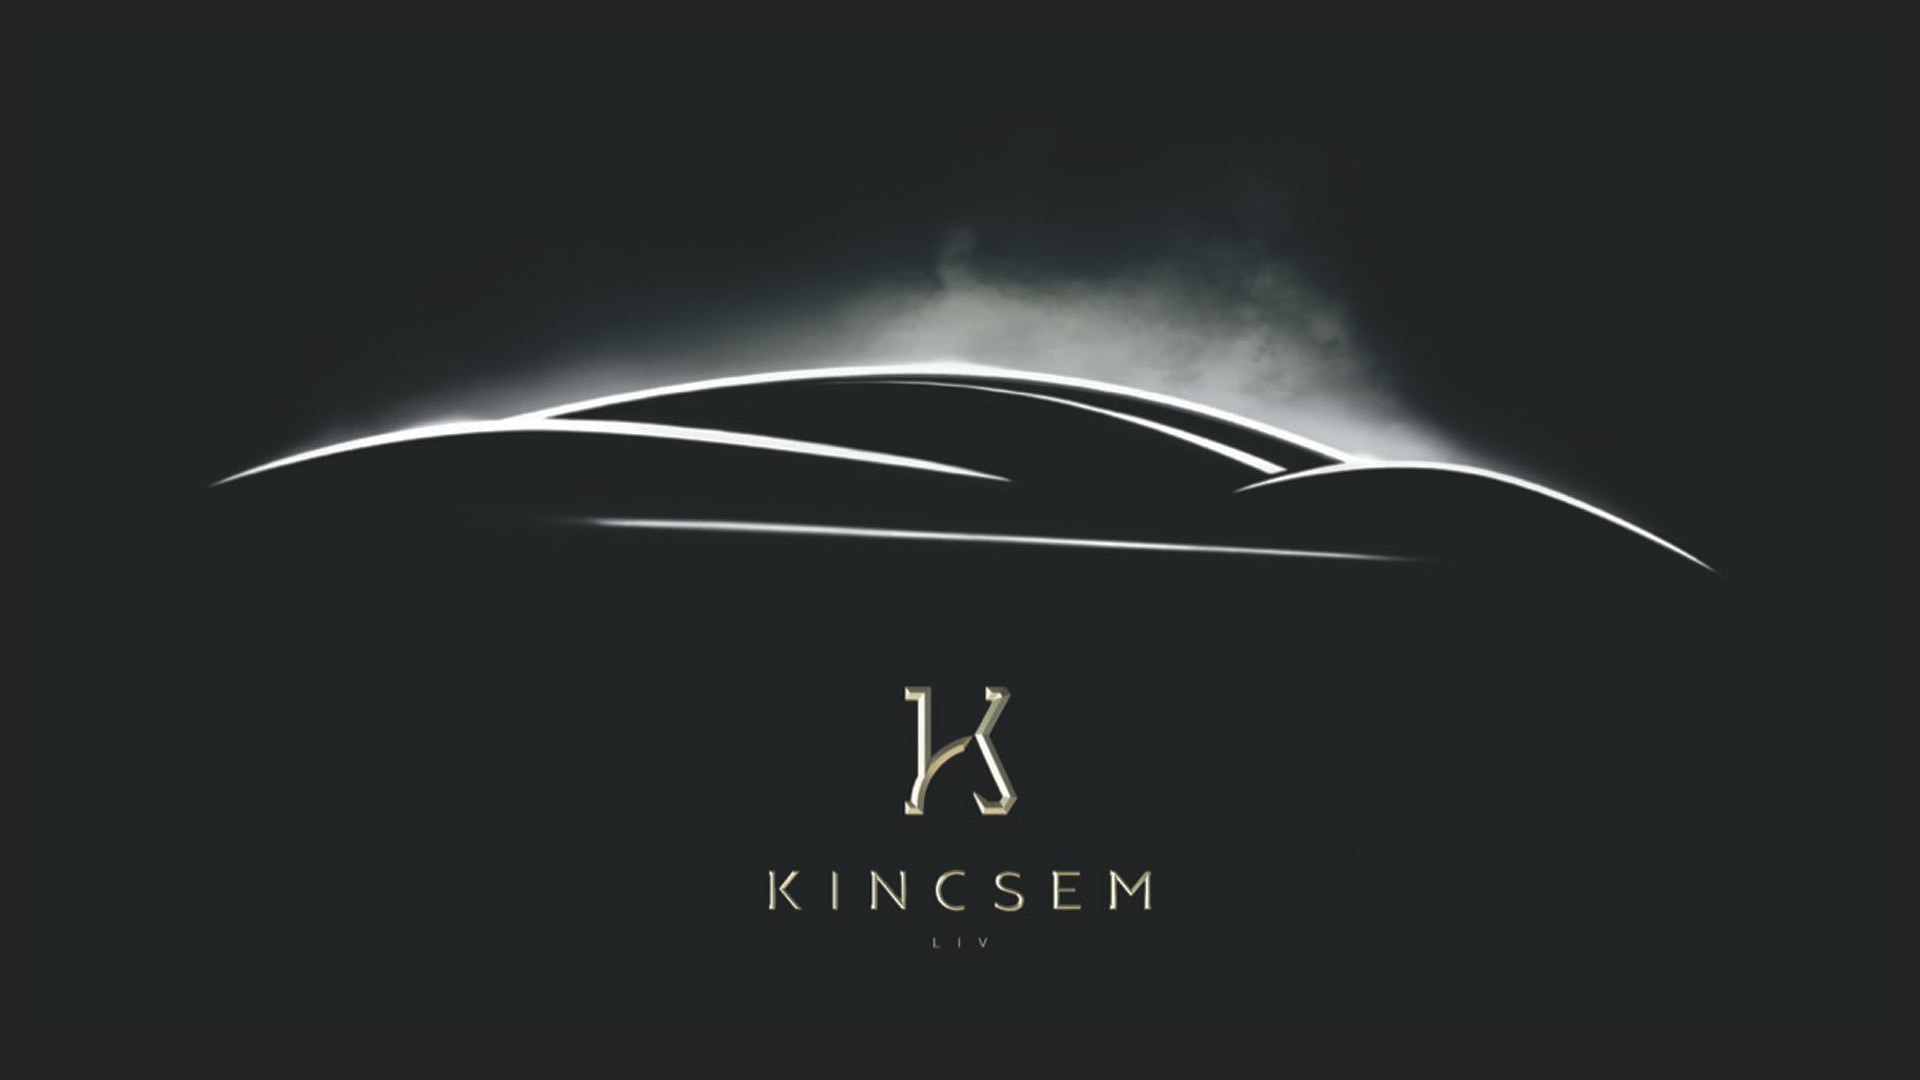 Teaser for Kincsem Hyper-GT debuting in late 2021